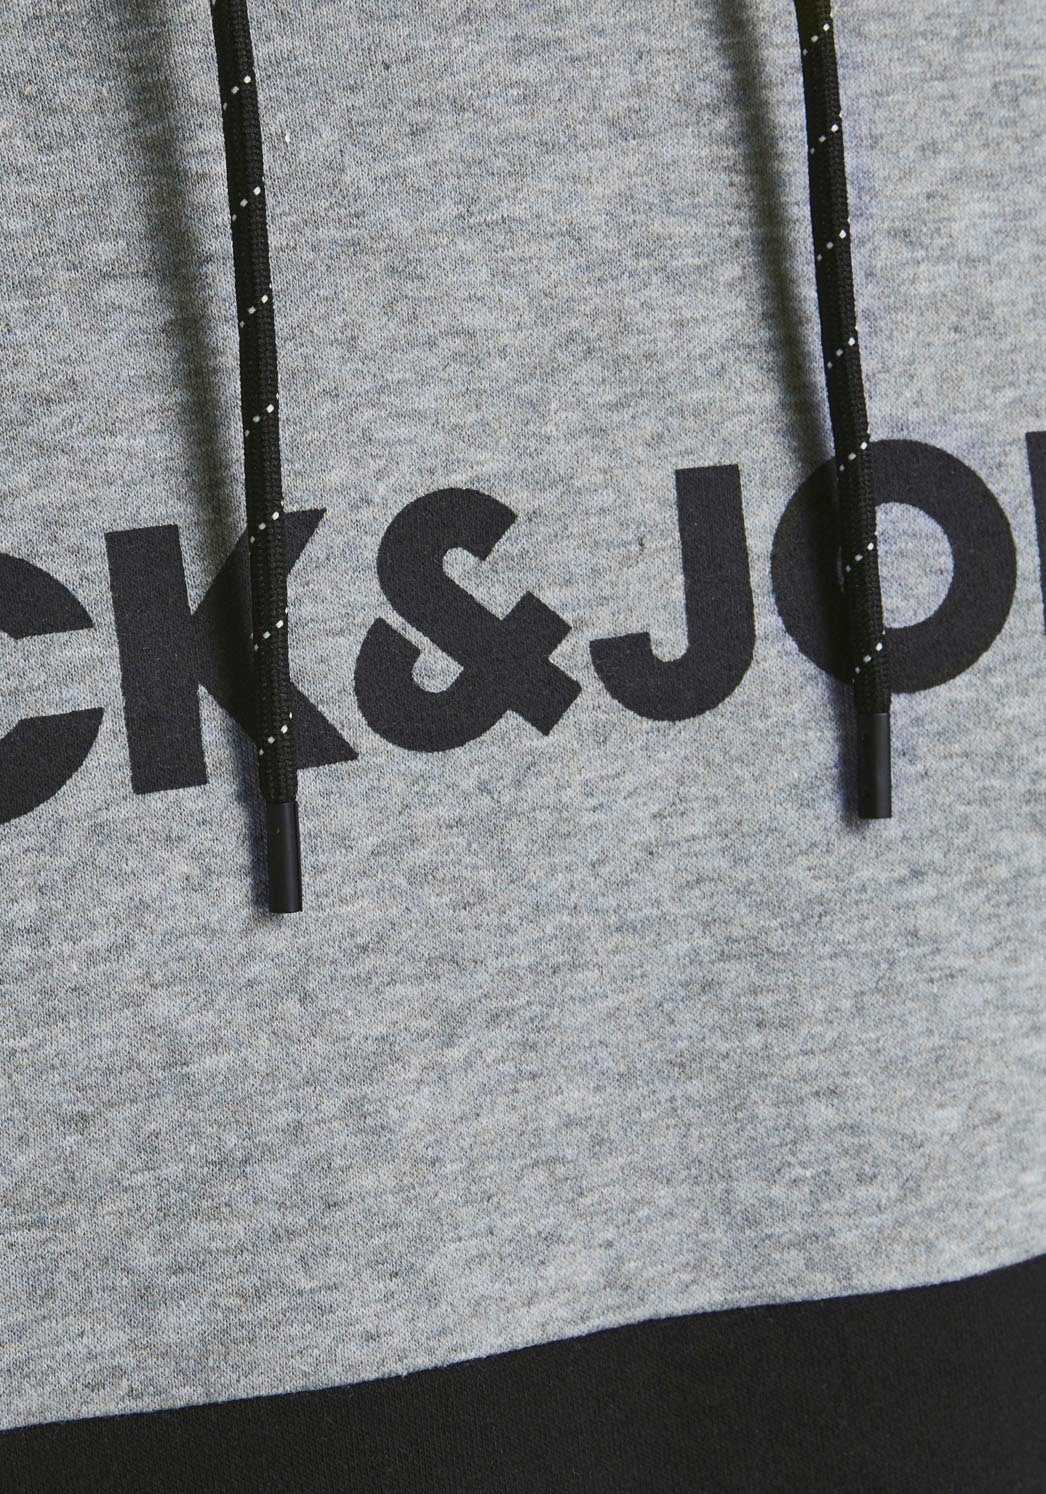 SWEAT Kapuzensweatshirt BLOCKIN weiß & HOOD Jones Jack LOGO